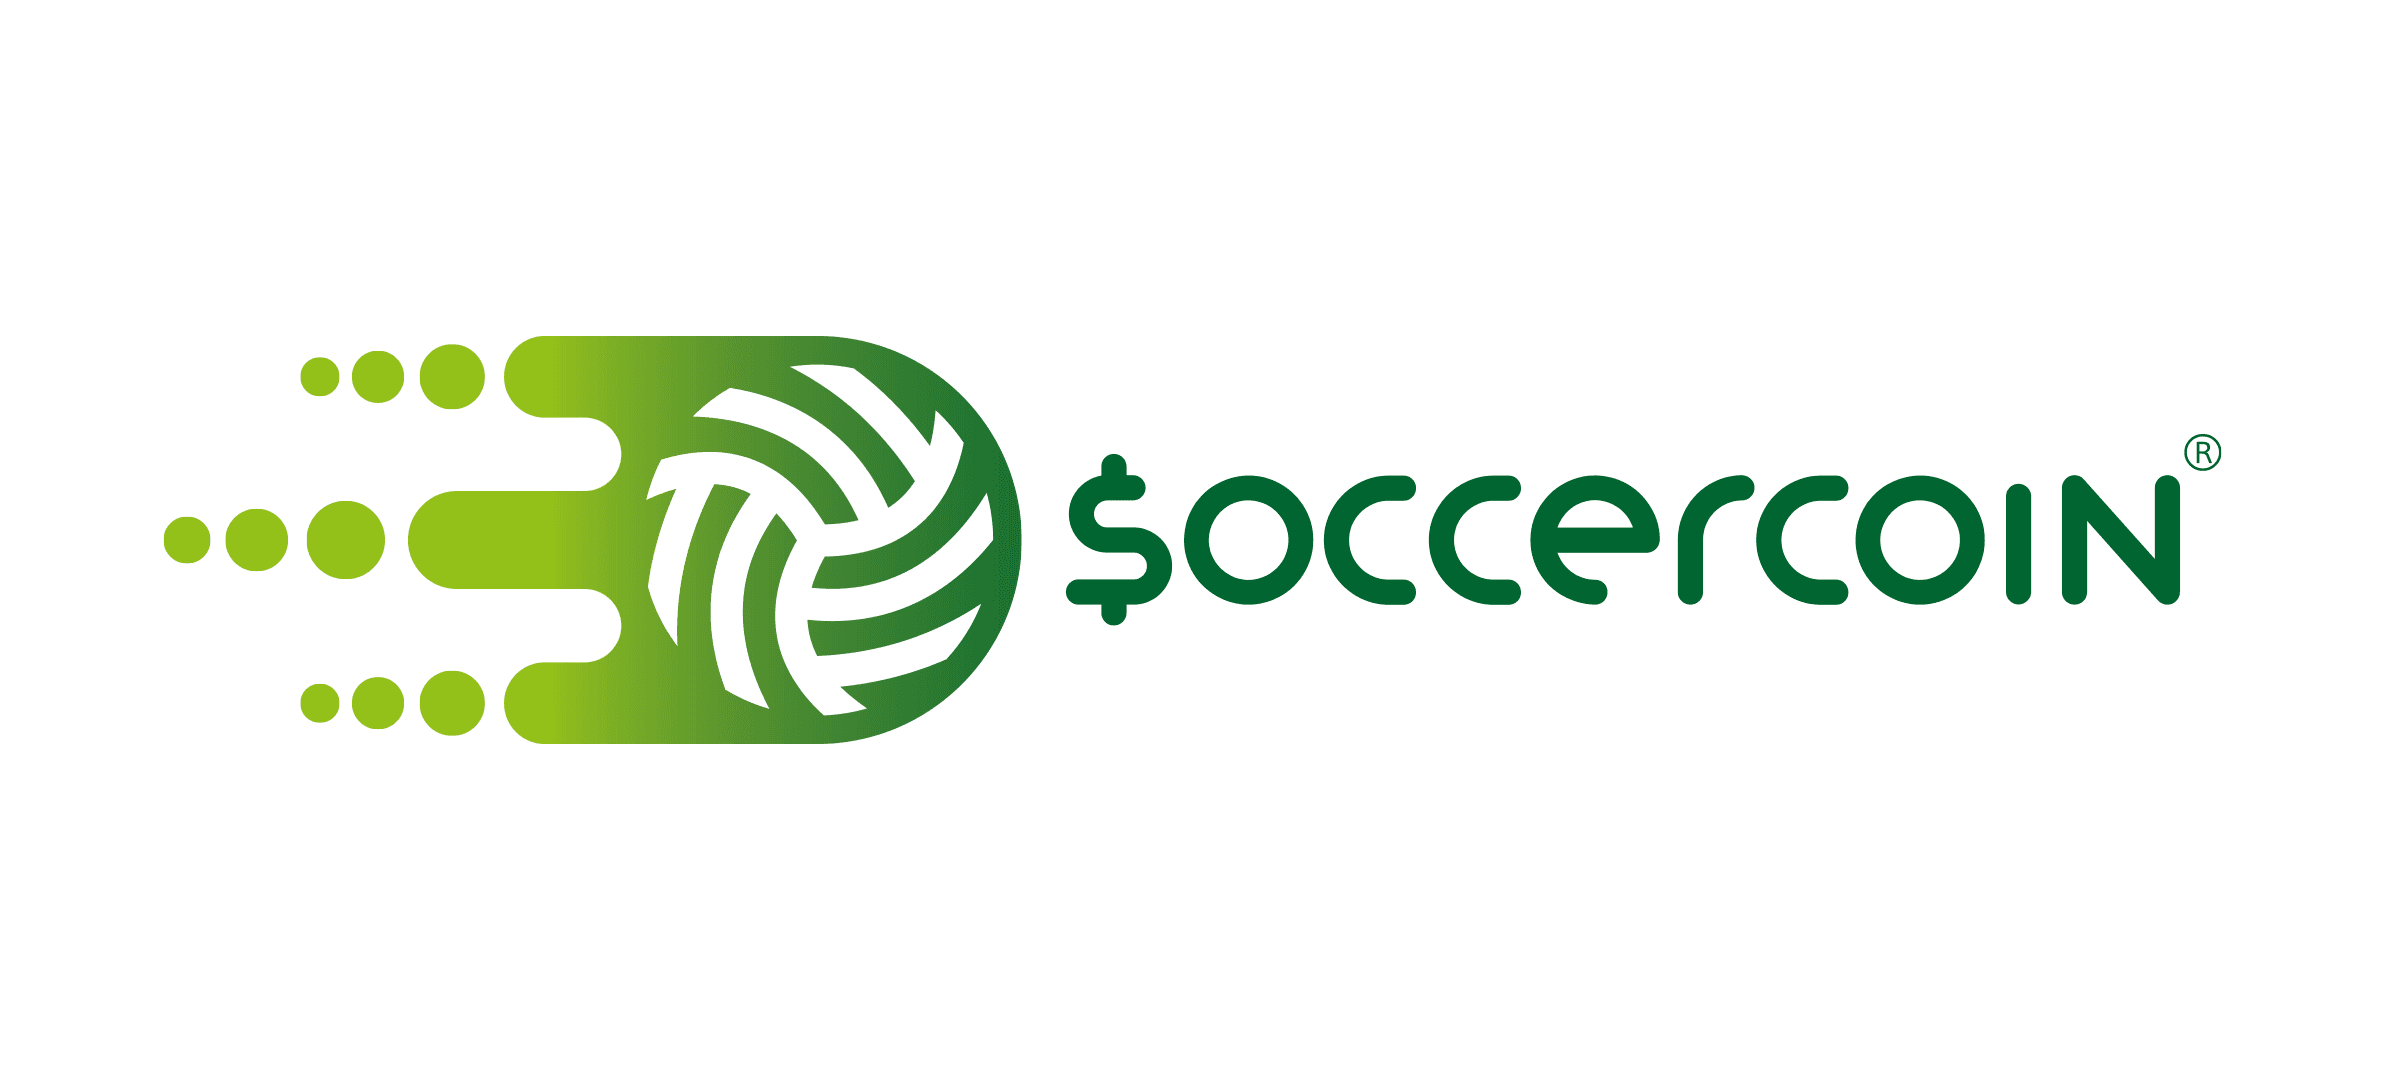 SoccerCoin_NFT 横幅